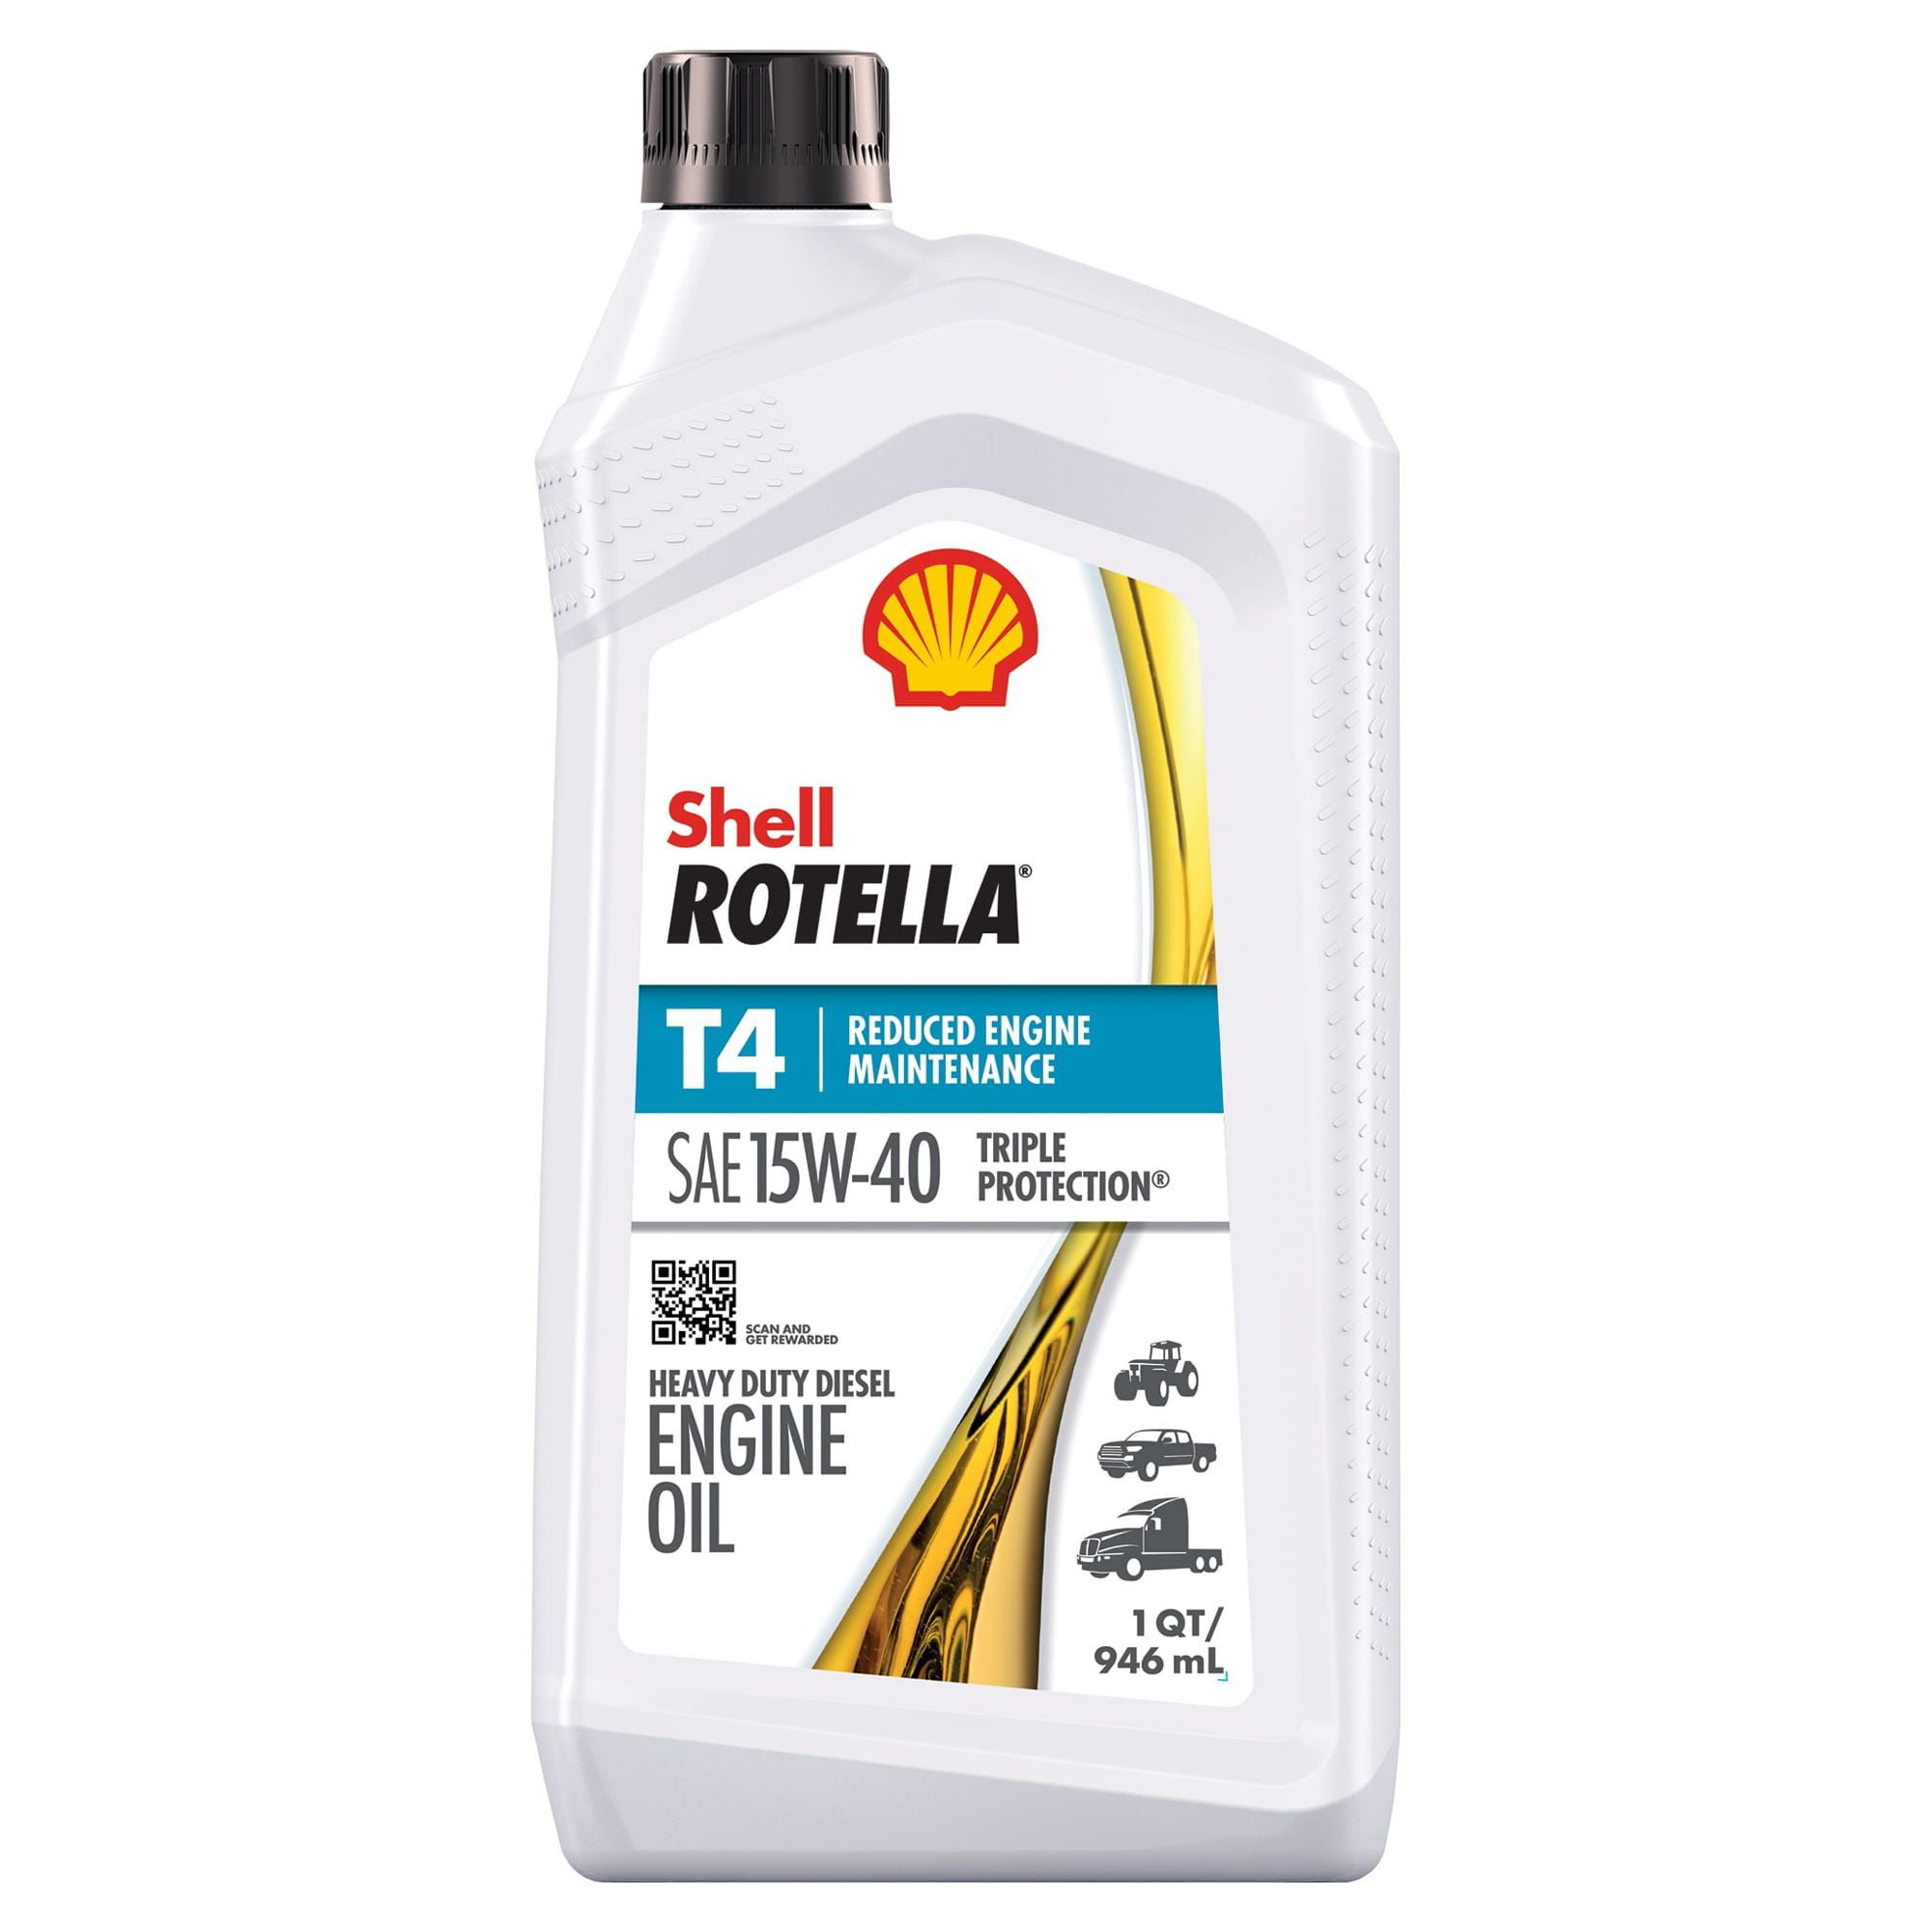 Shell Rotella T4 Triple Protection 15W-40 Diesel Motor Oil, 1 Quart 